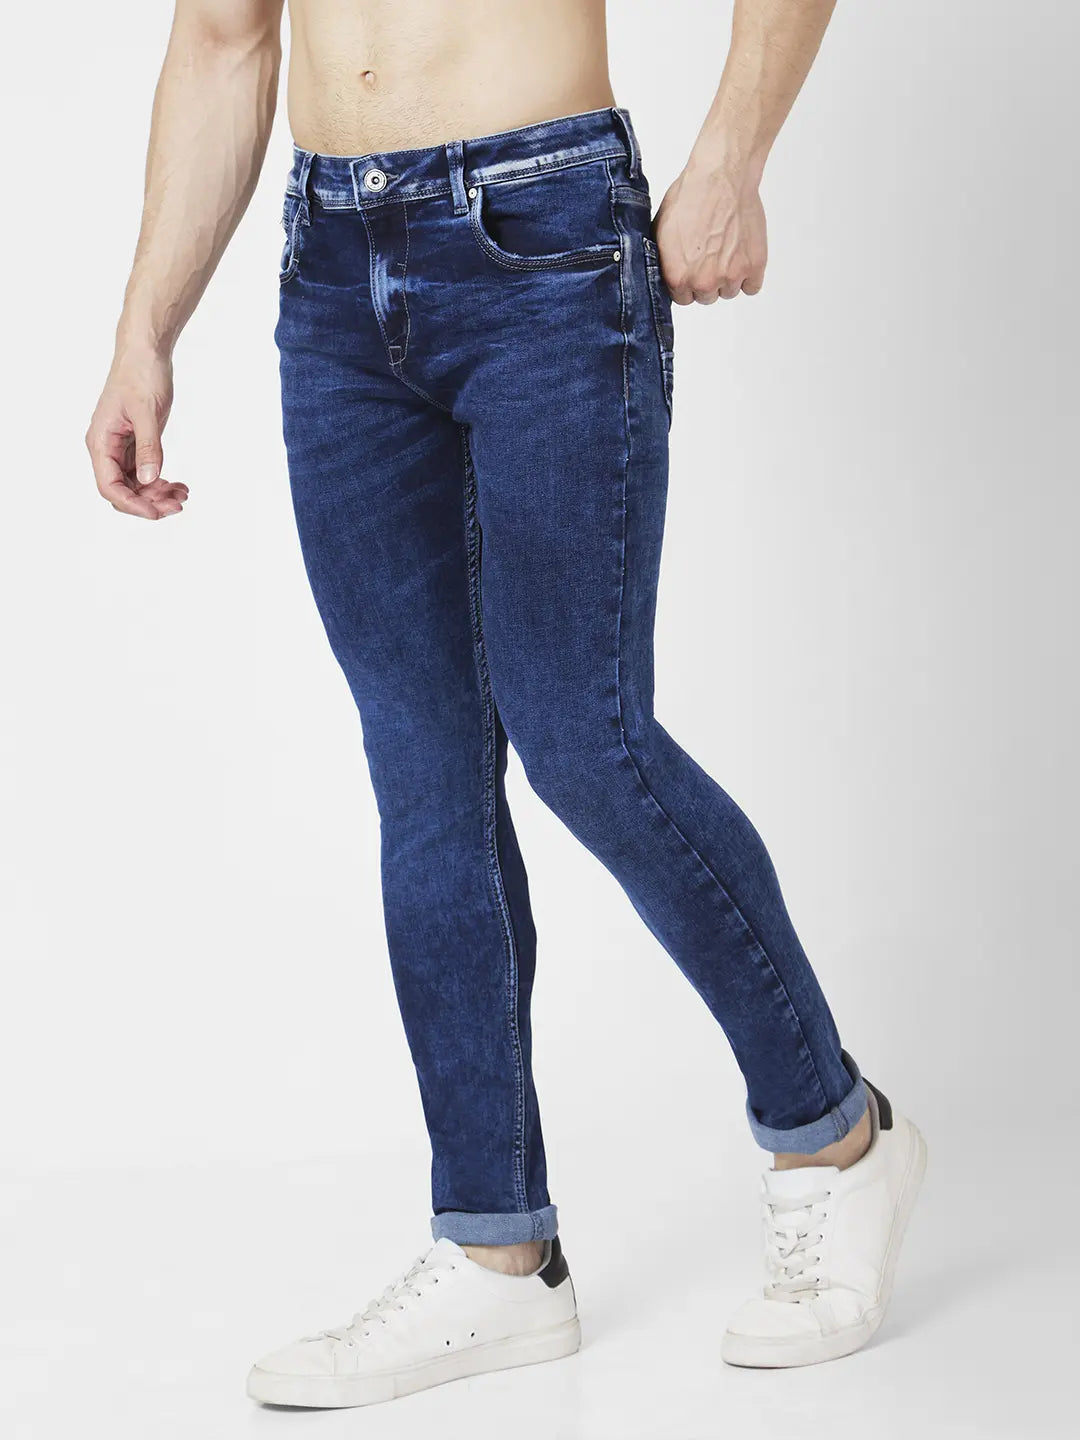 Spykar Men Dark Blue Cotton Slim Fit Narrow Length Clean Look Low Rise Jeans (Skinny)